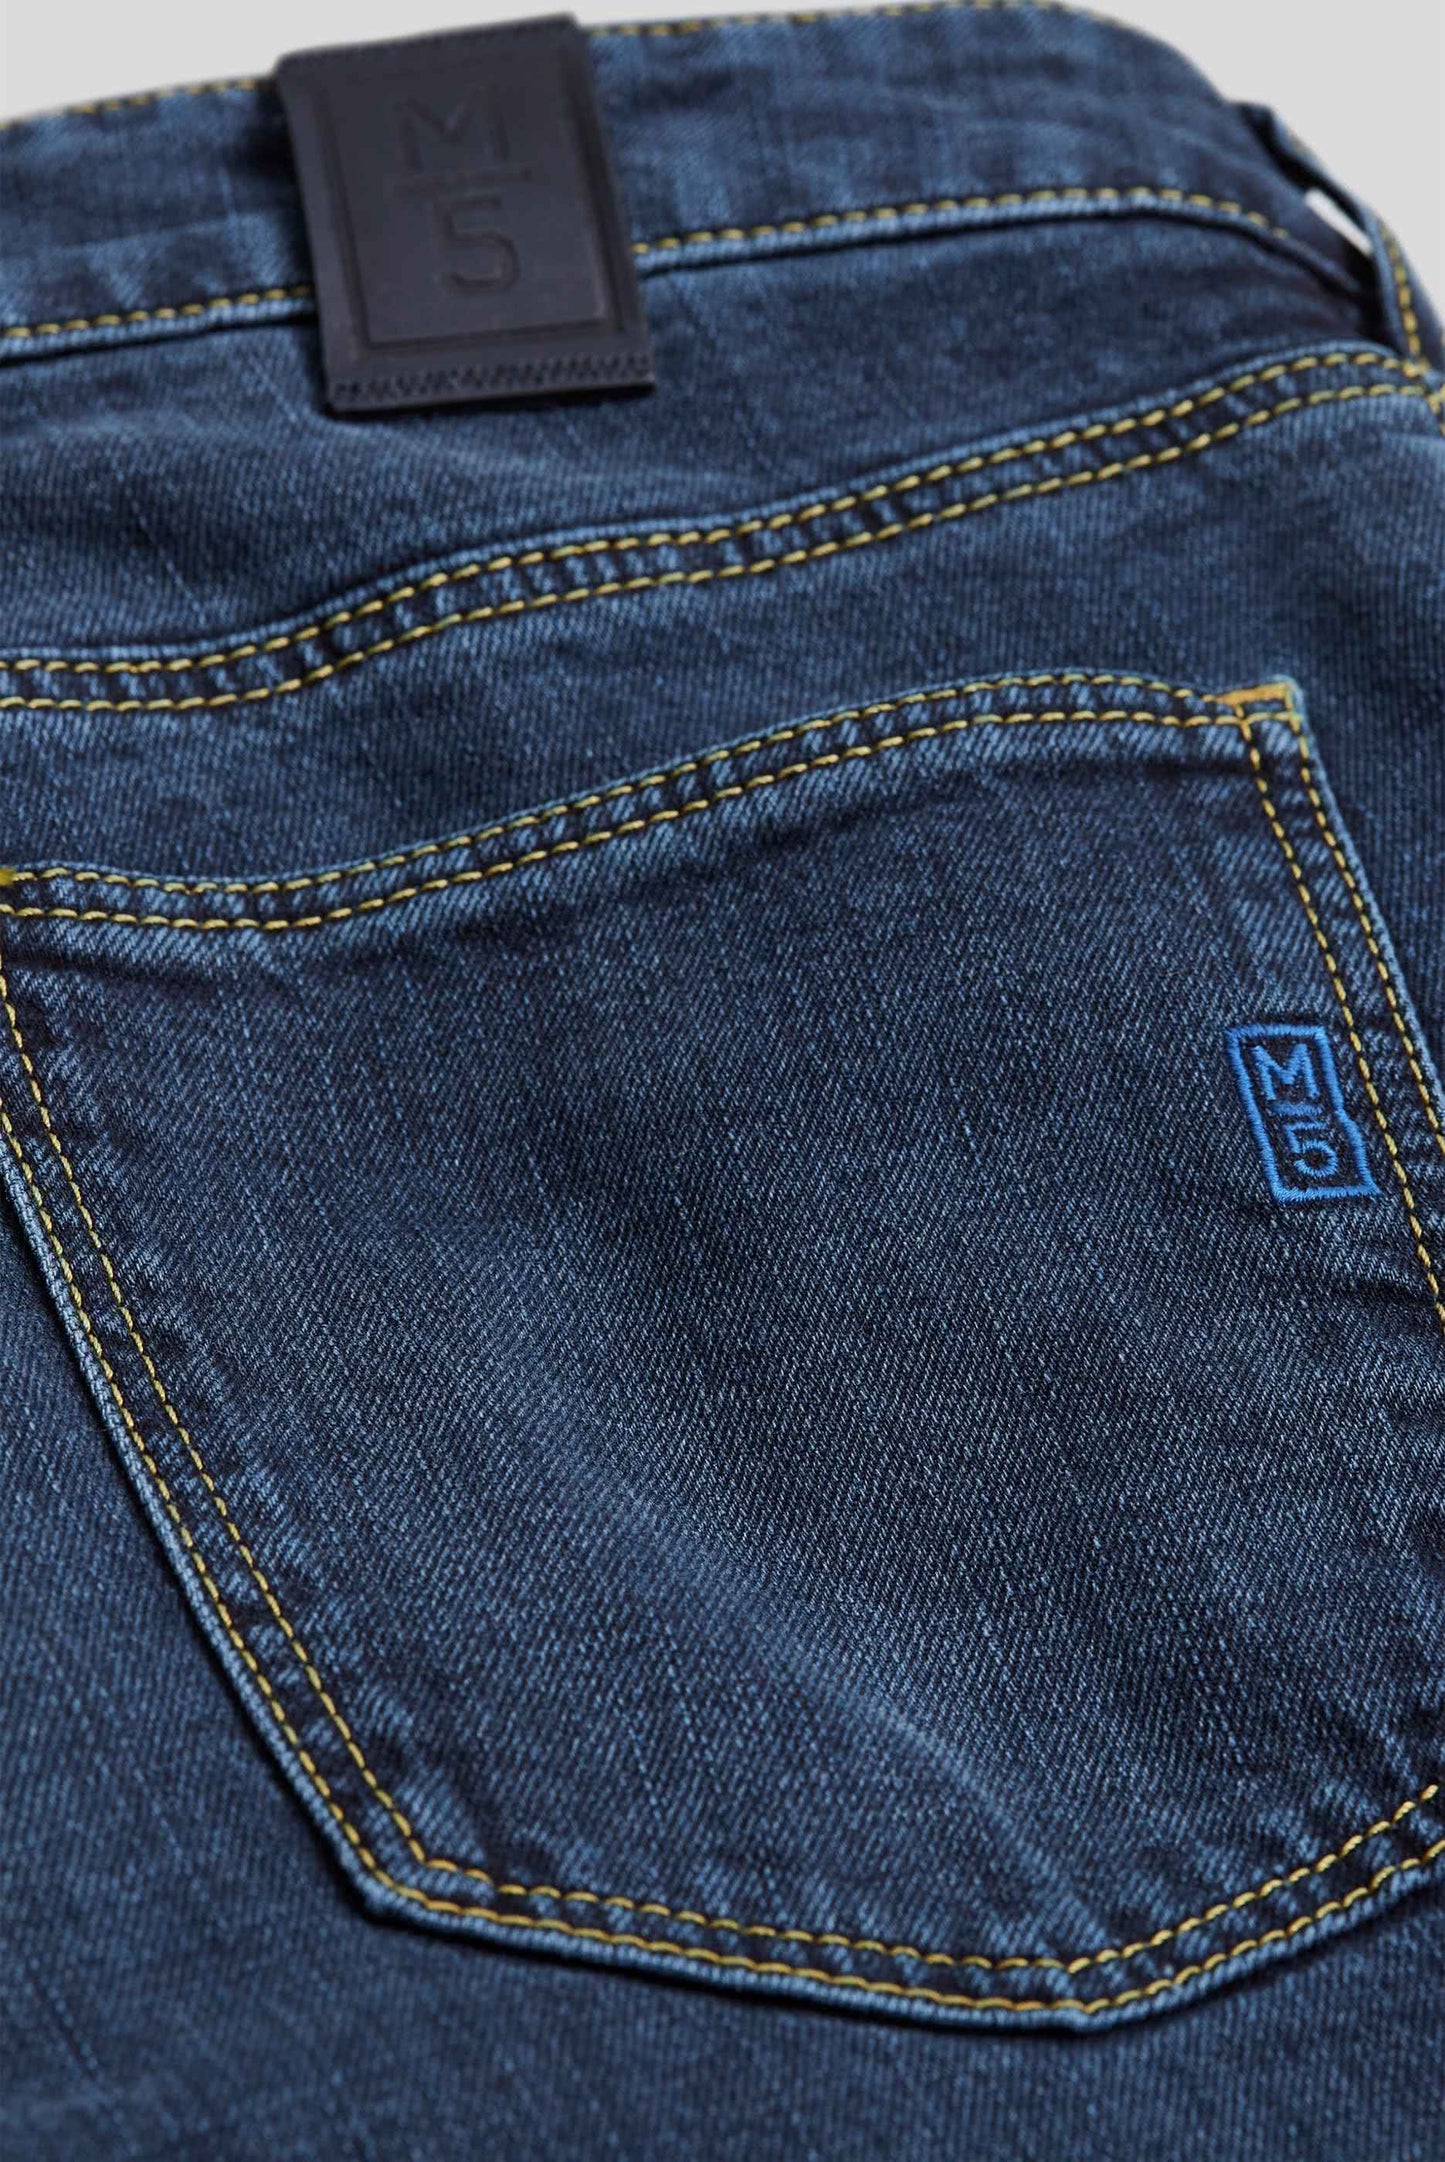 Men's Meyer 'M5' Denim Jeans Stylish Denim Blue Classic Style Designer Jeans